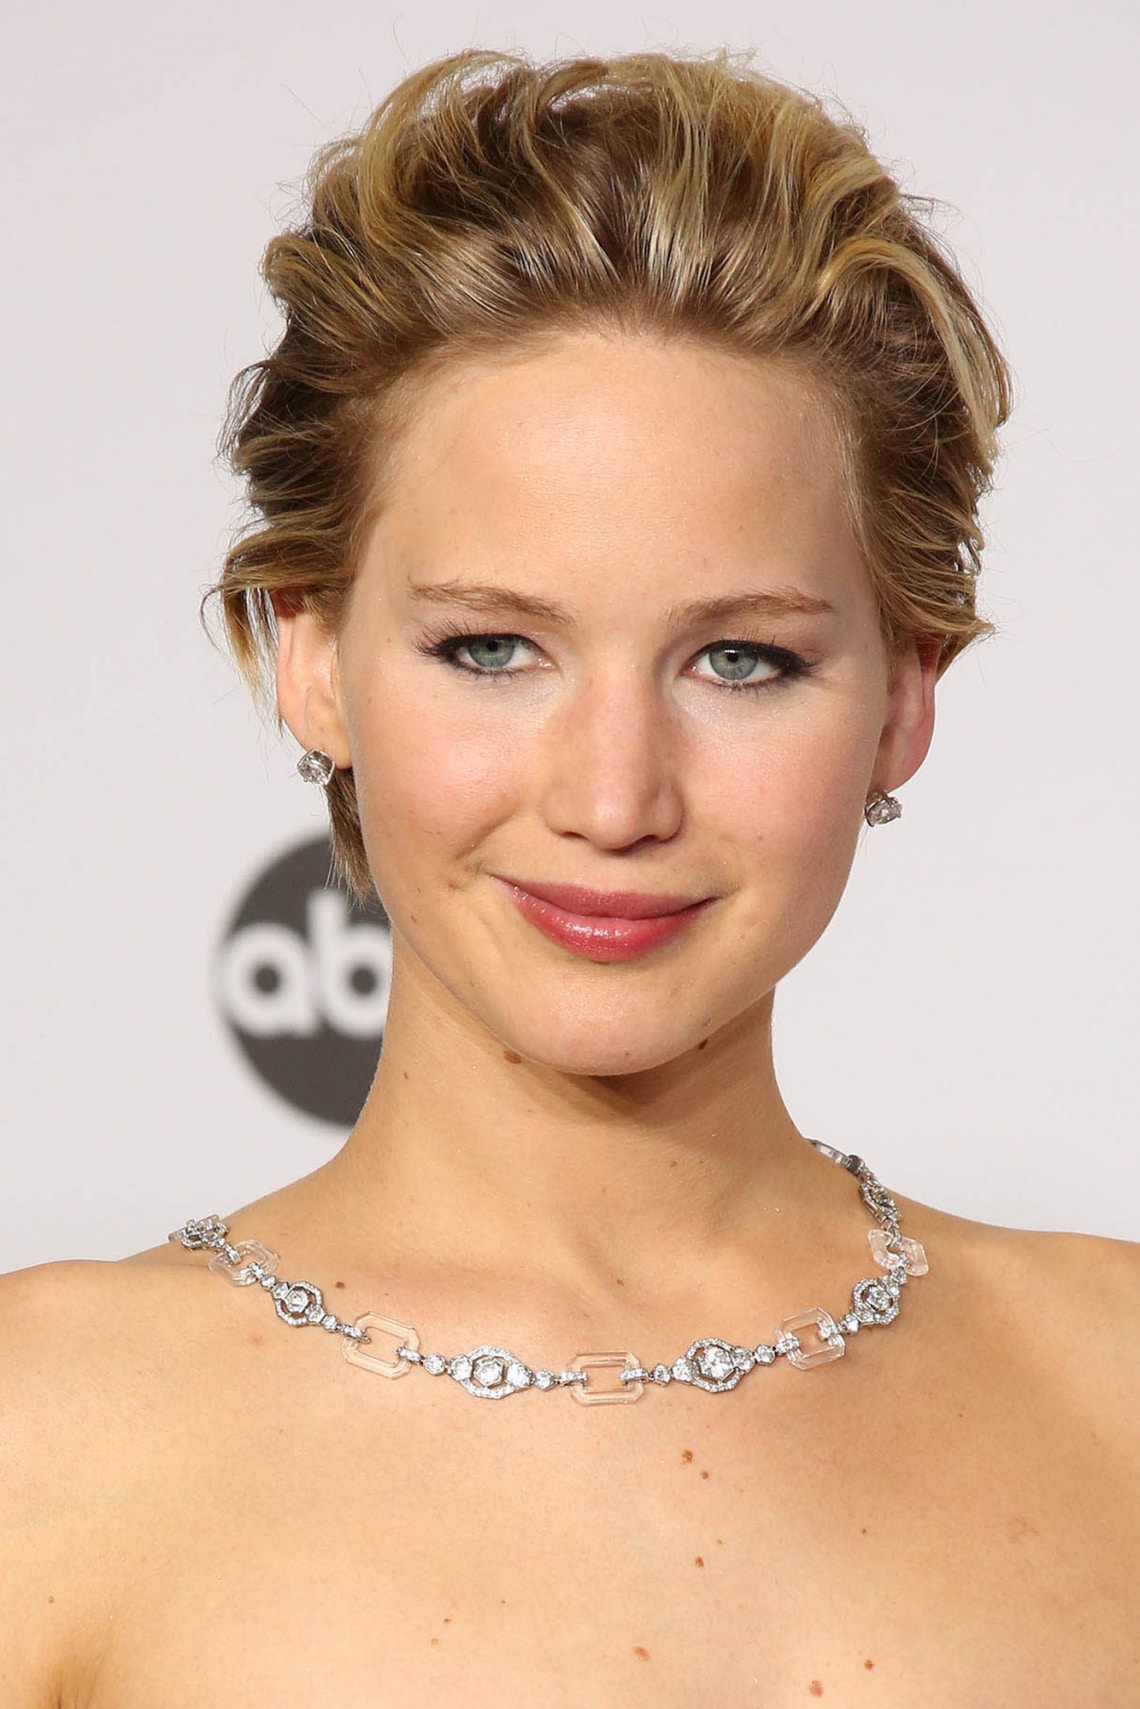 9. Jennifer Lawrence